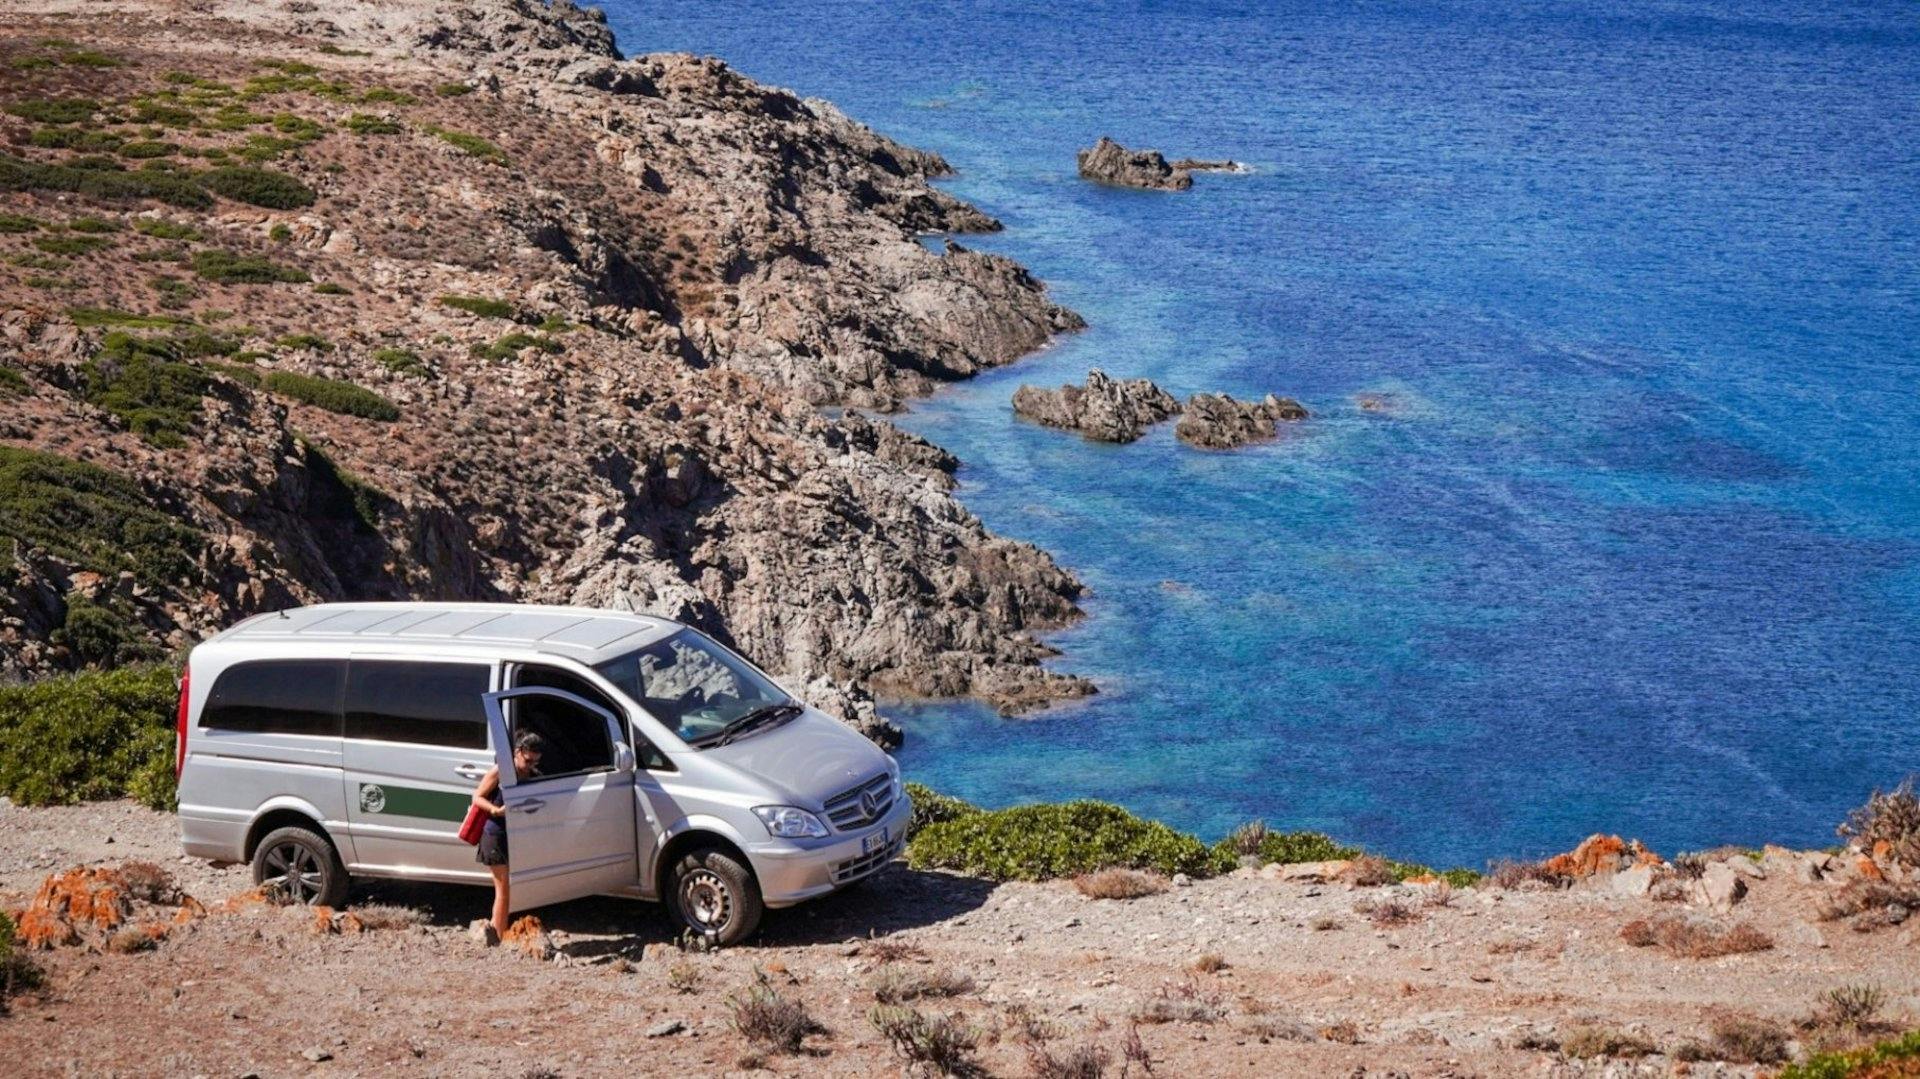 Minivan day tour to Asinara National Park from Stintino